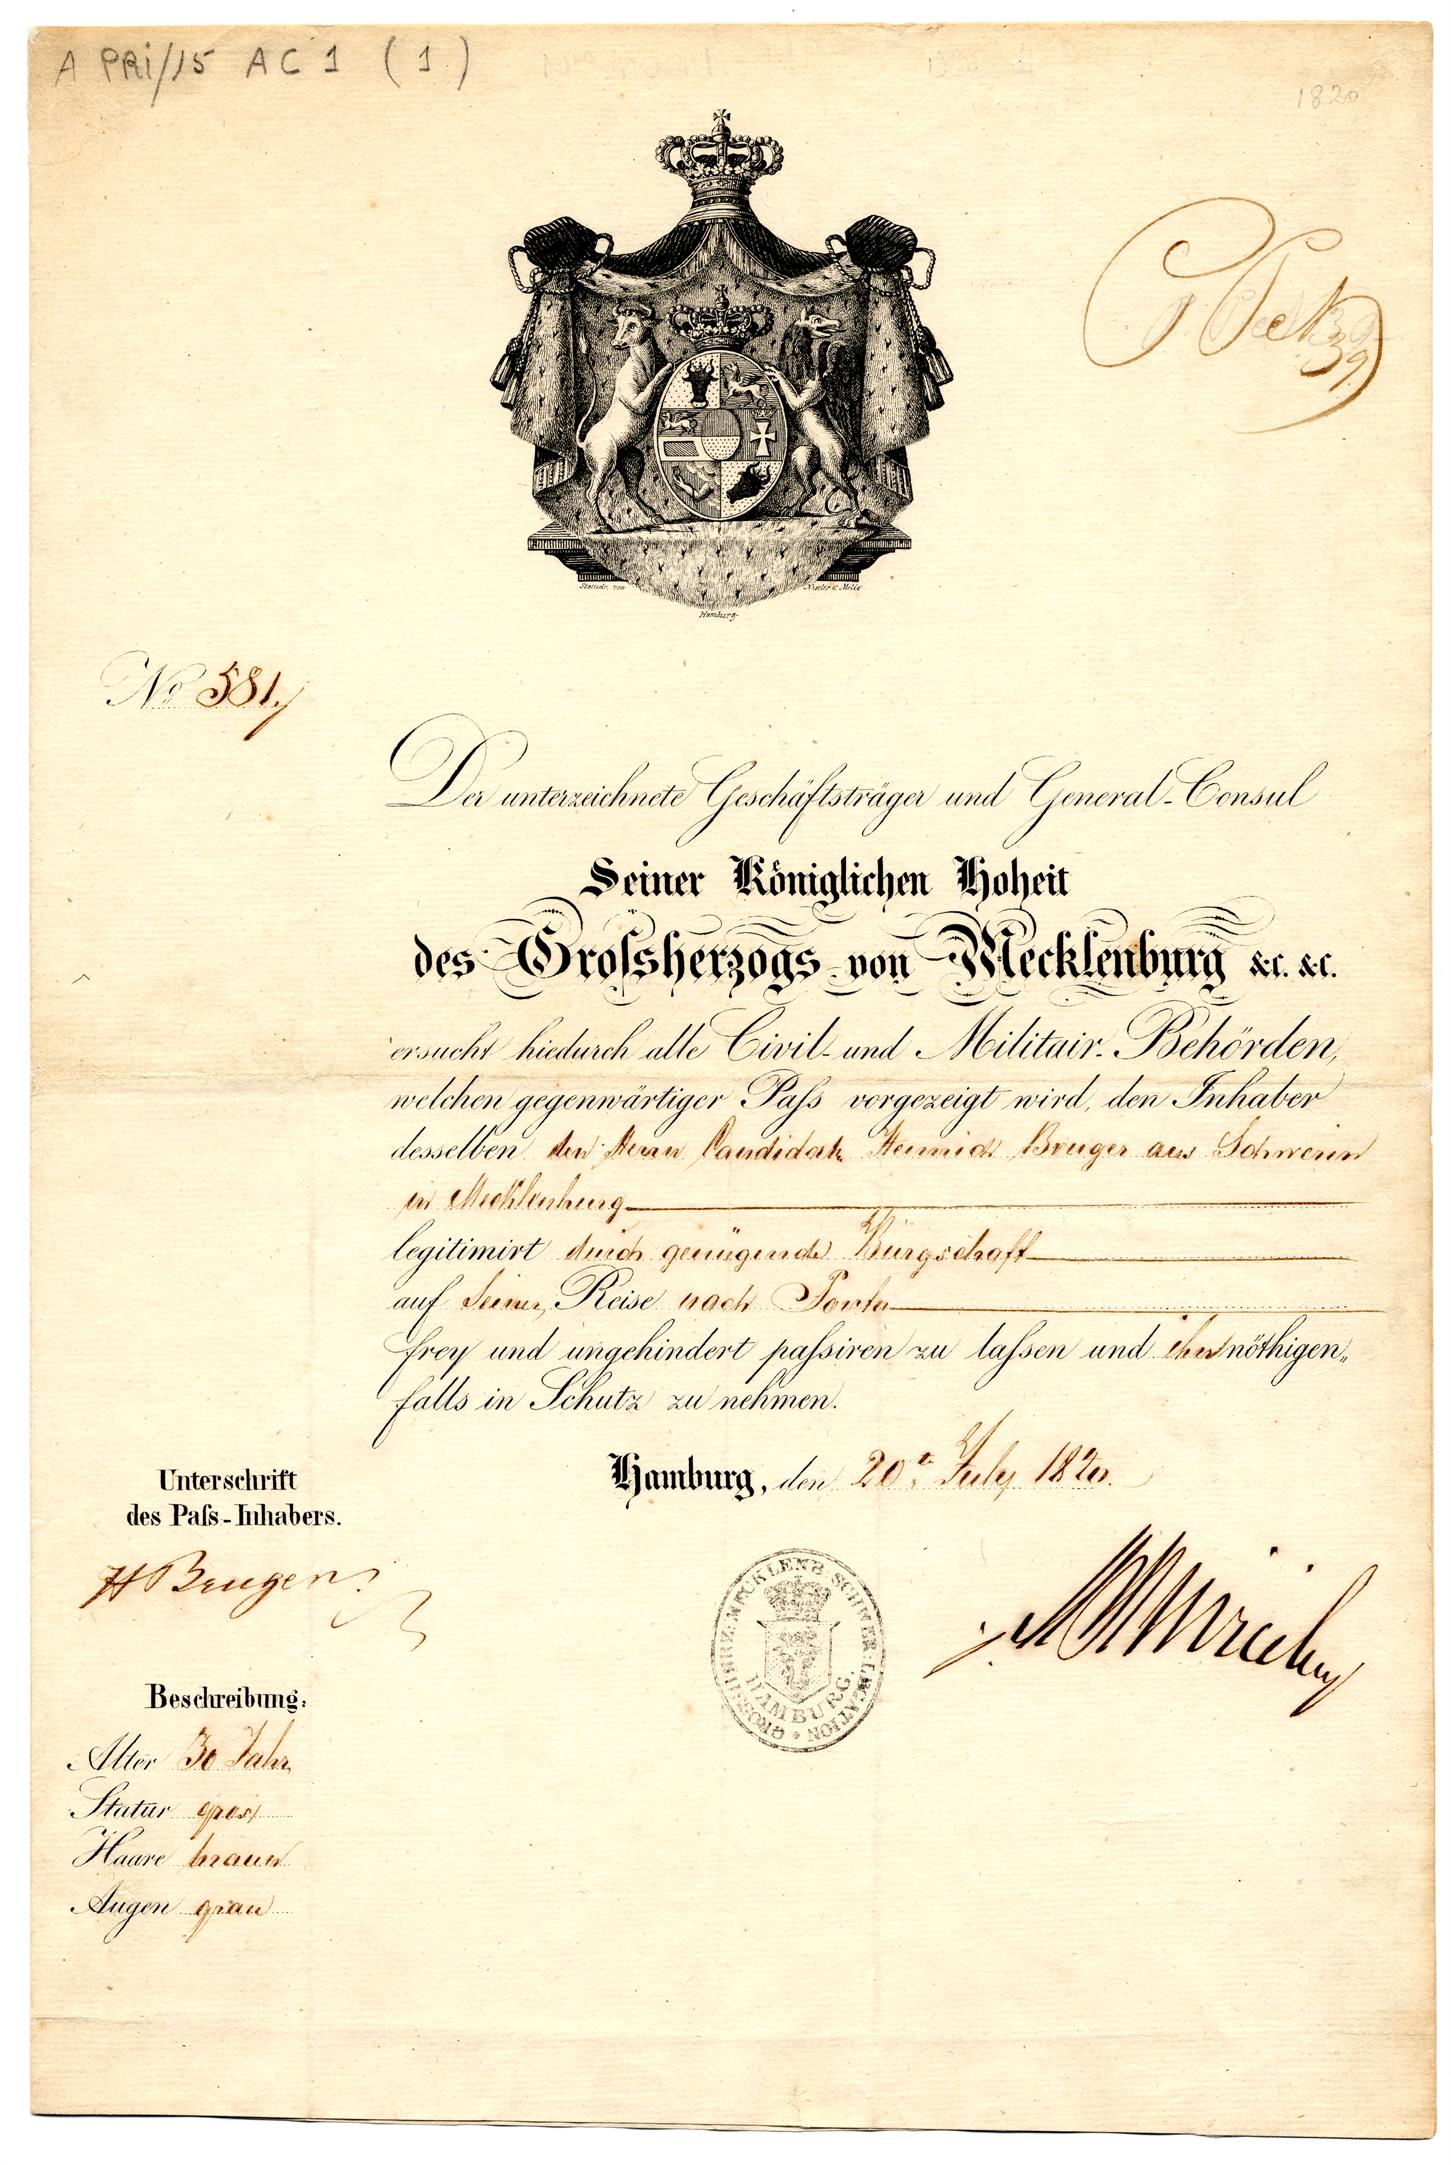 Passaporte de Candidah Heinrich Bruger